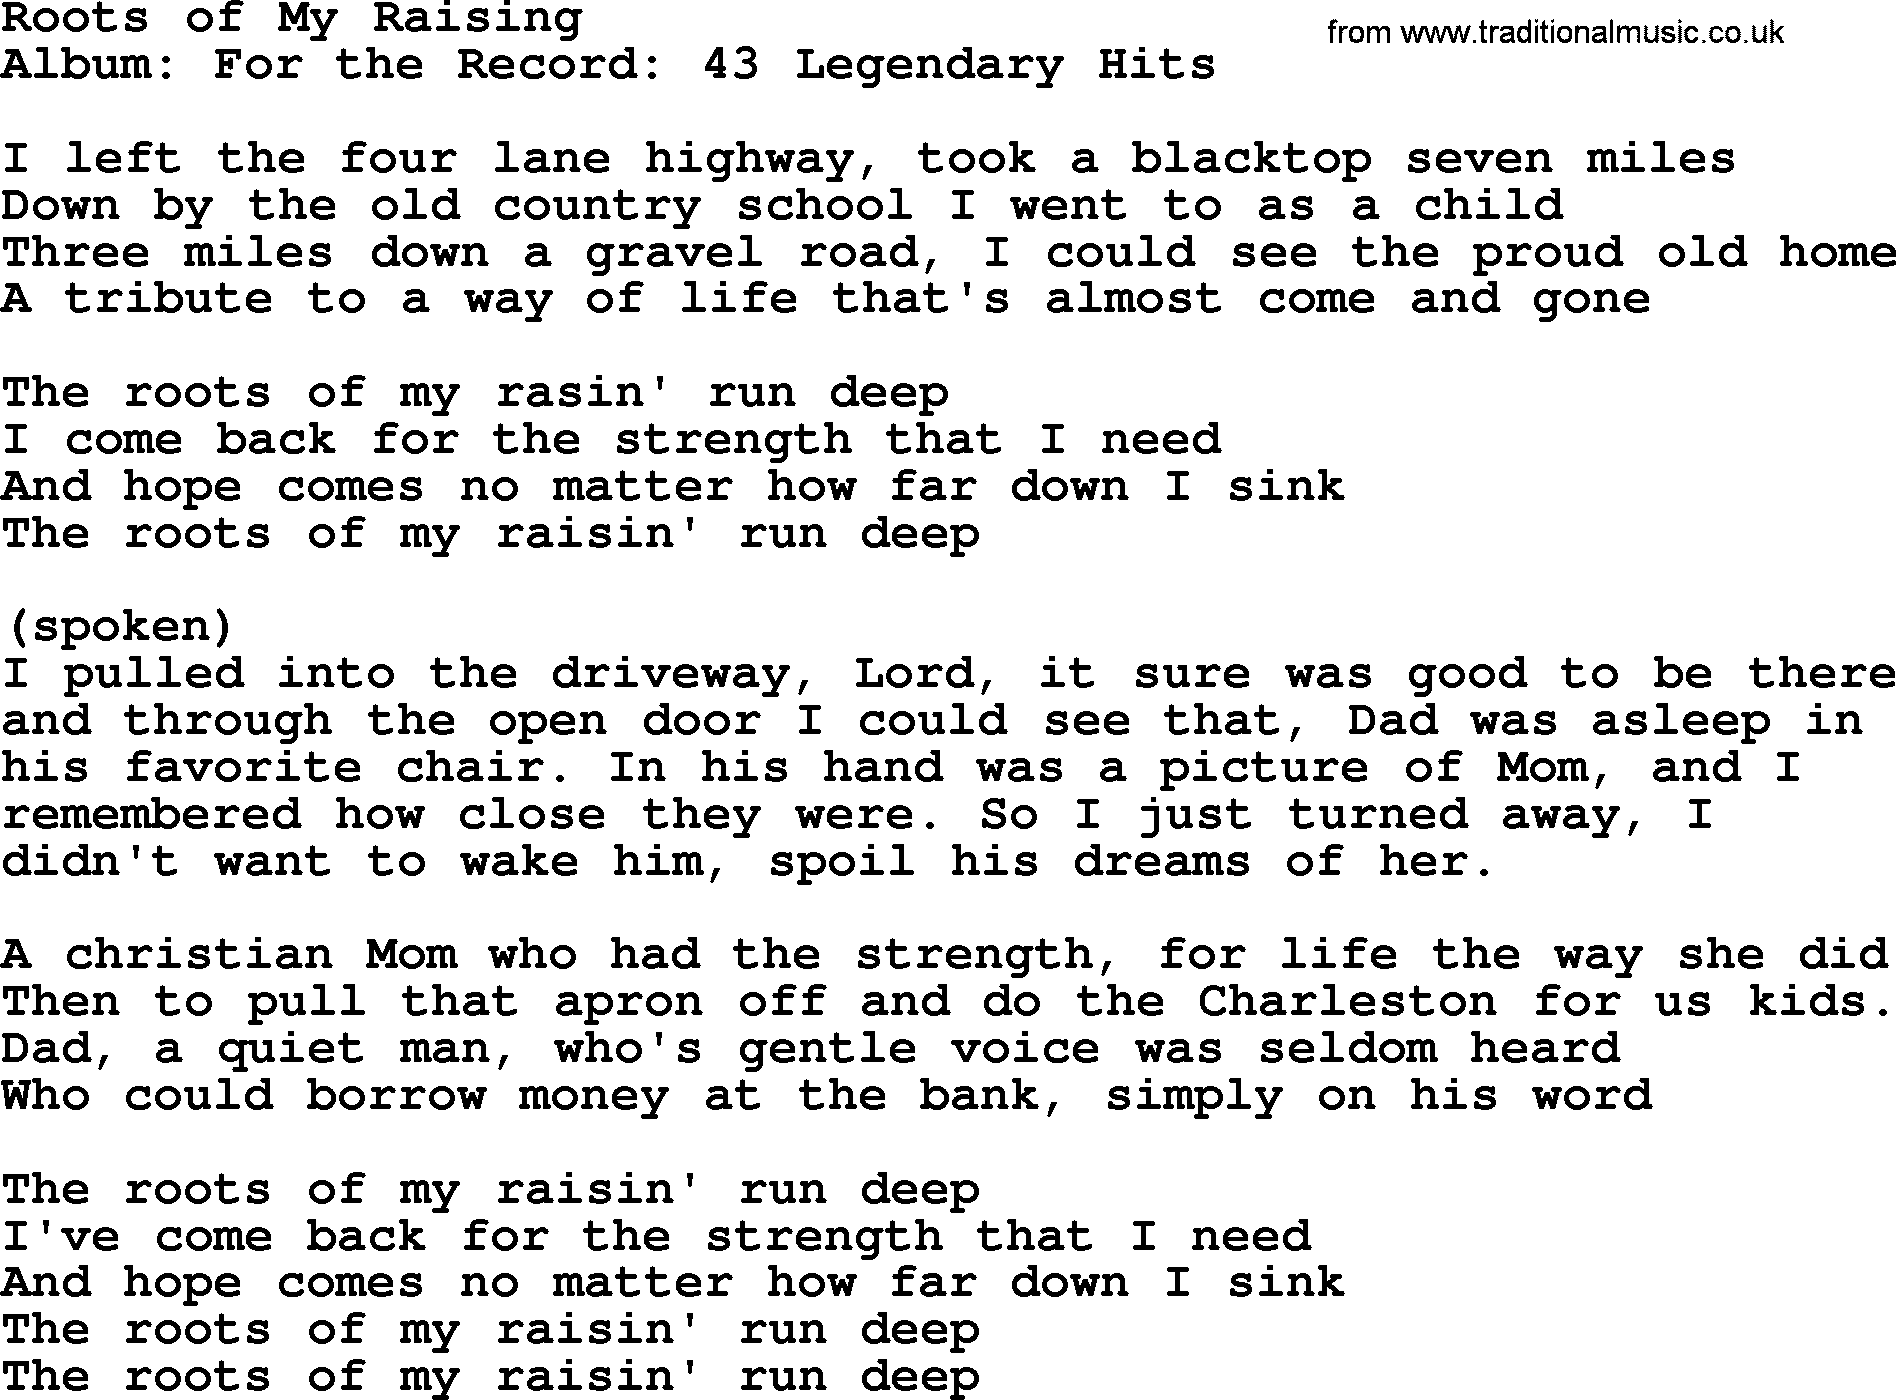 Merle Haggard song: Roots Of My Raising, lyrics.